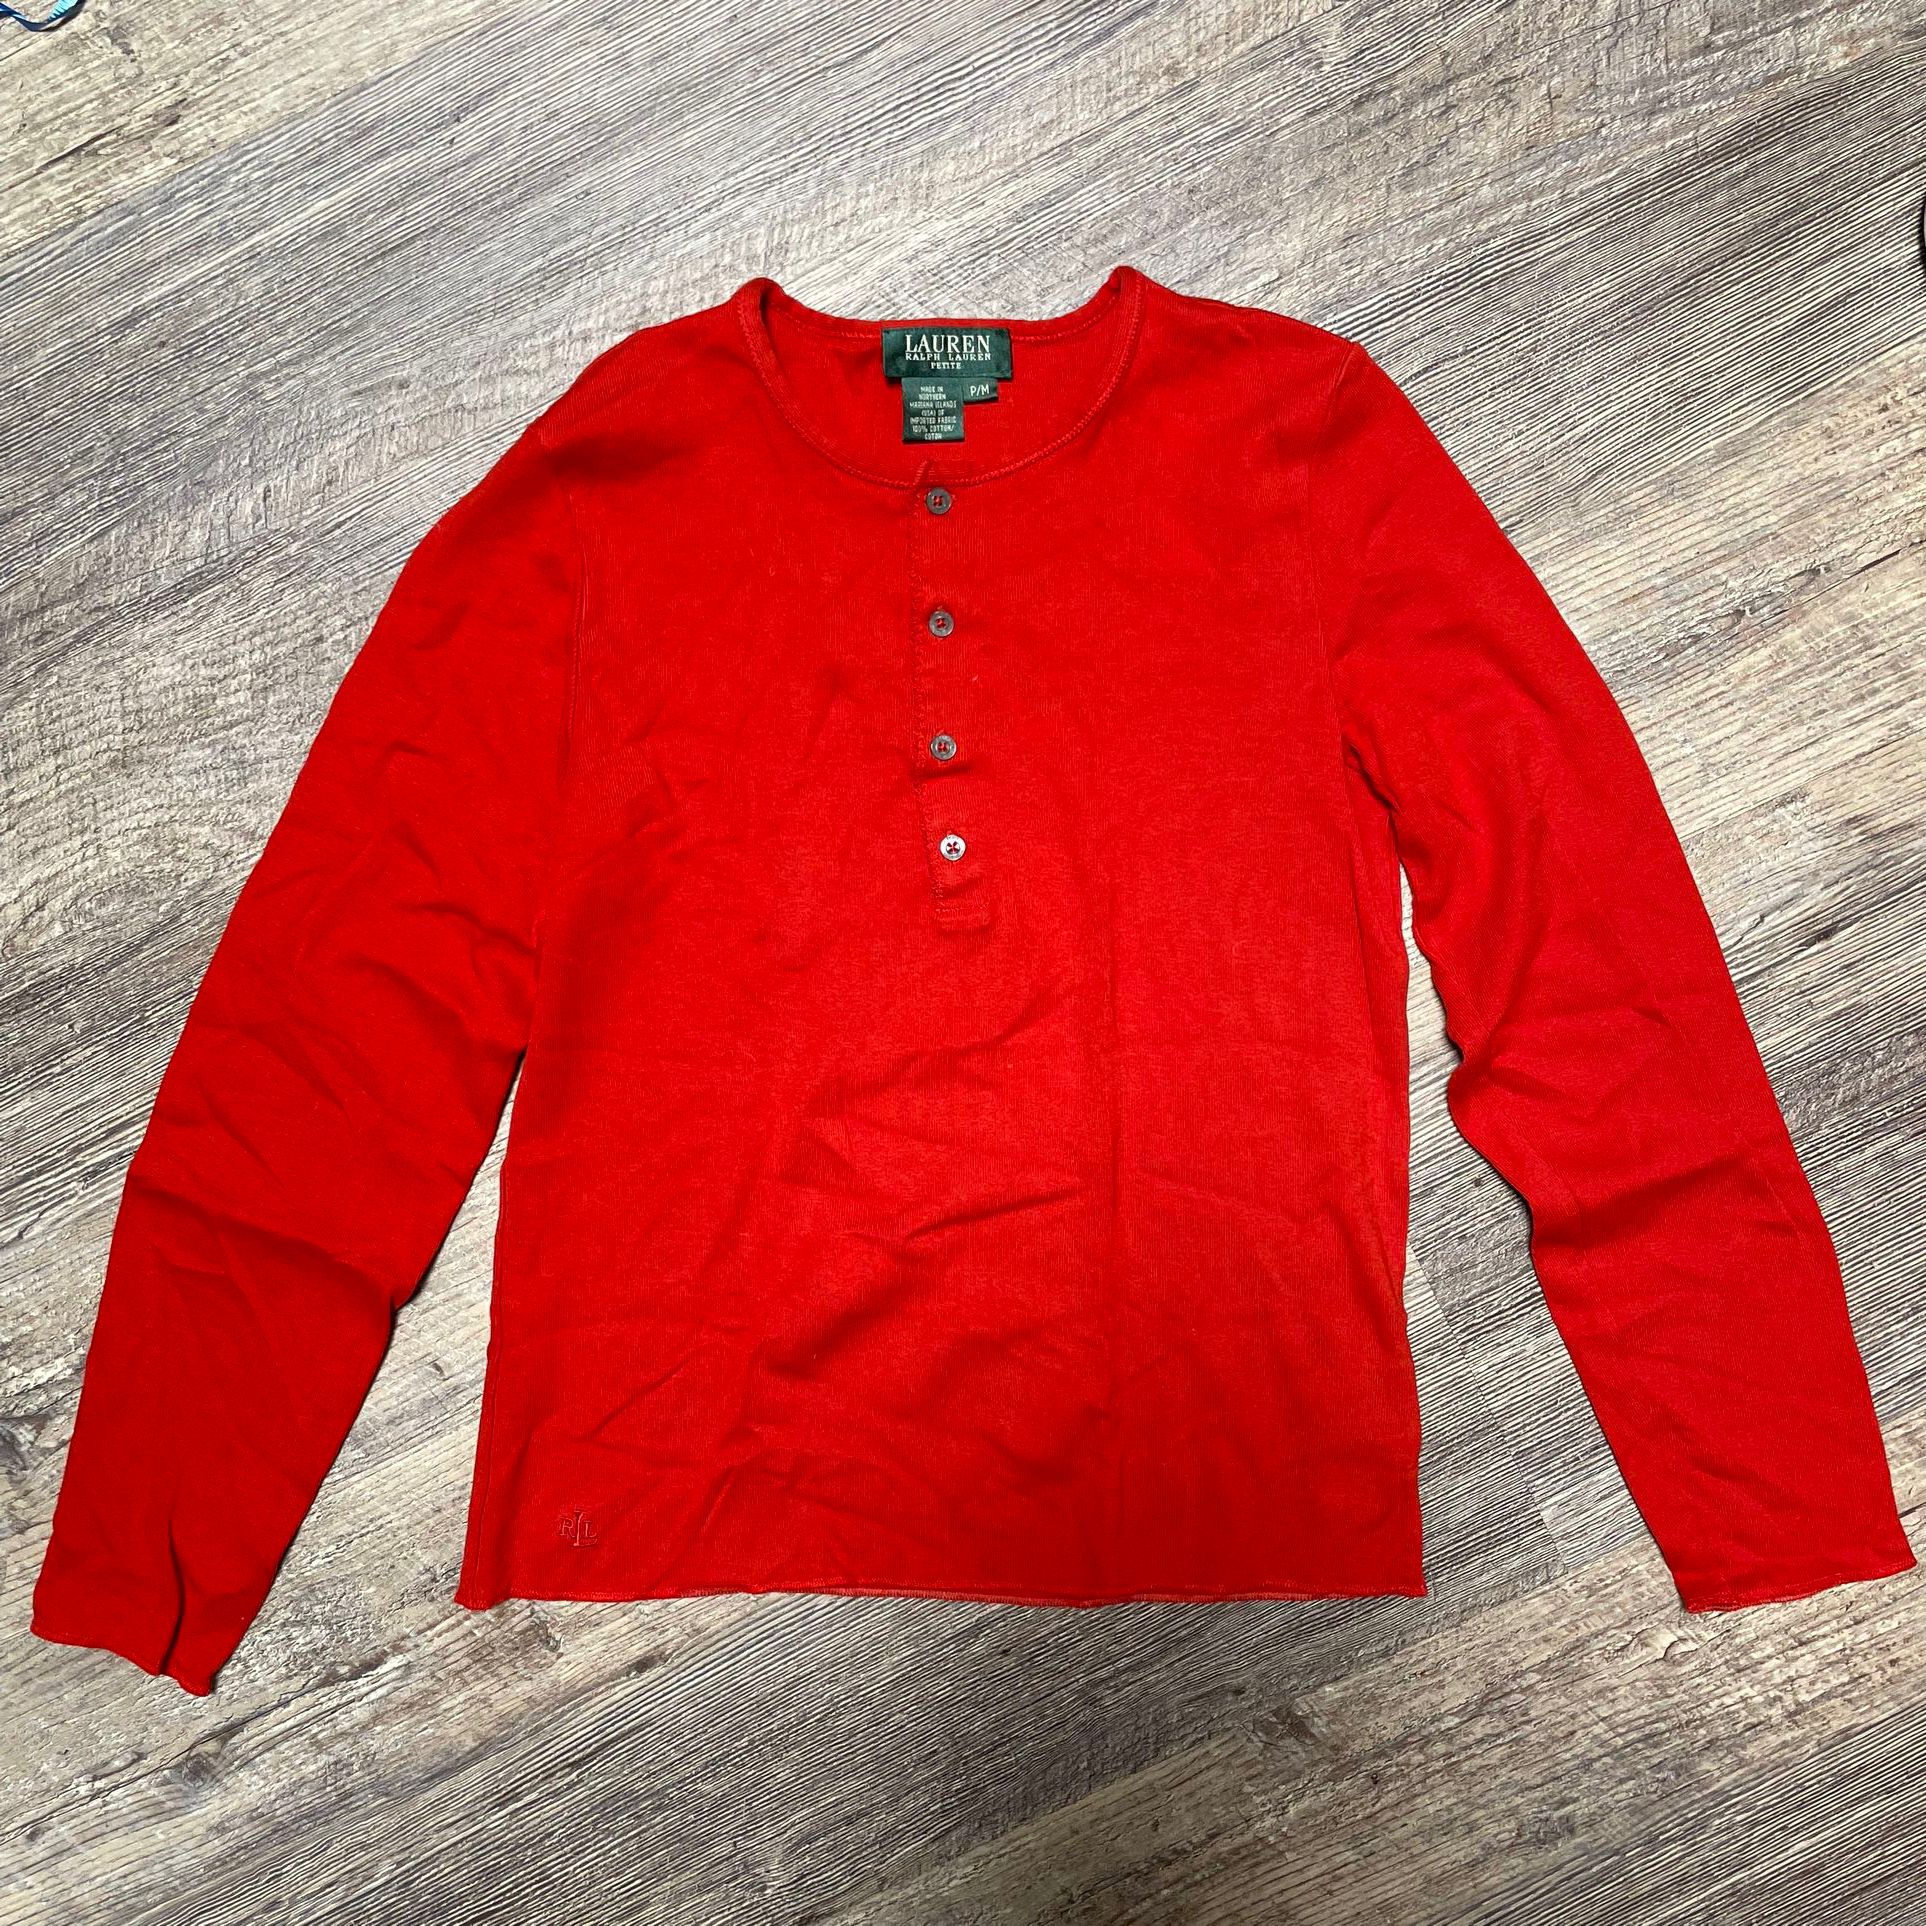 Ralph Lauren Women's Red/Orange Long Sleeve With Buttons Top